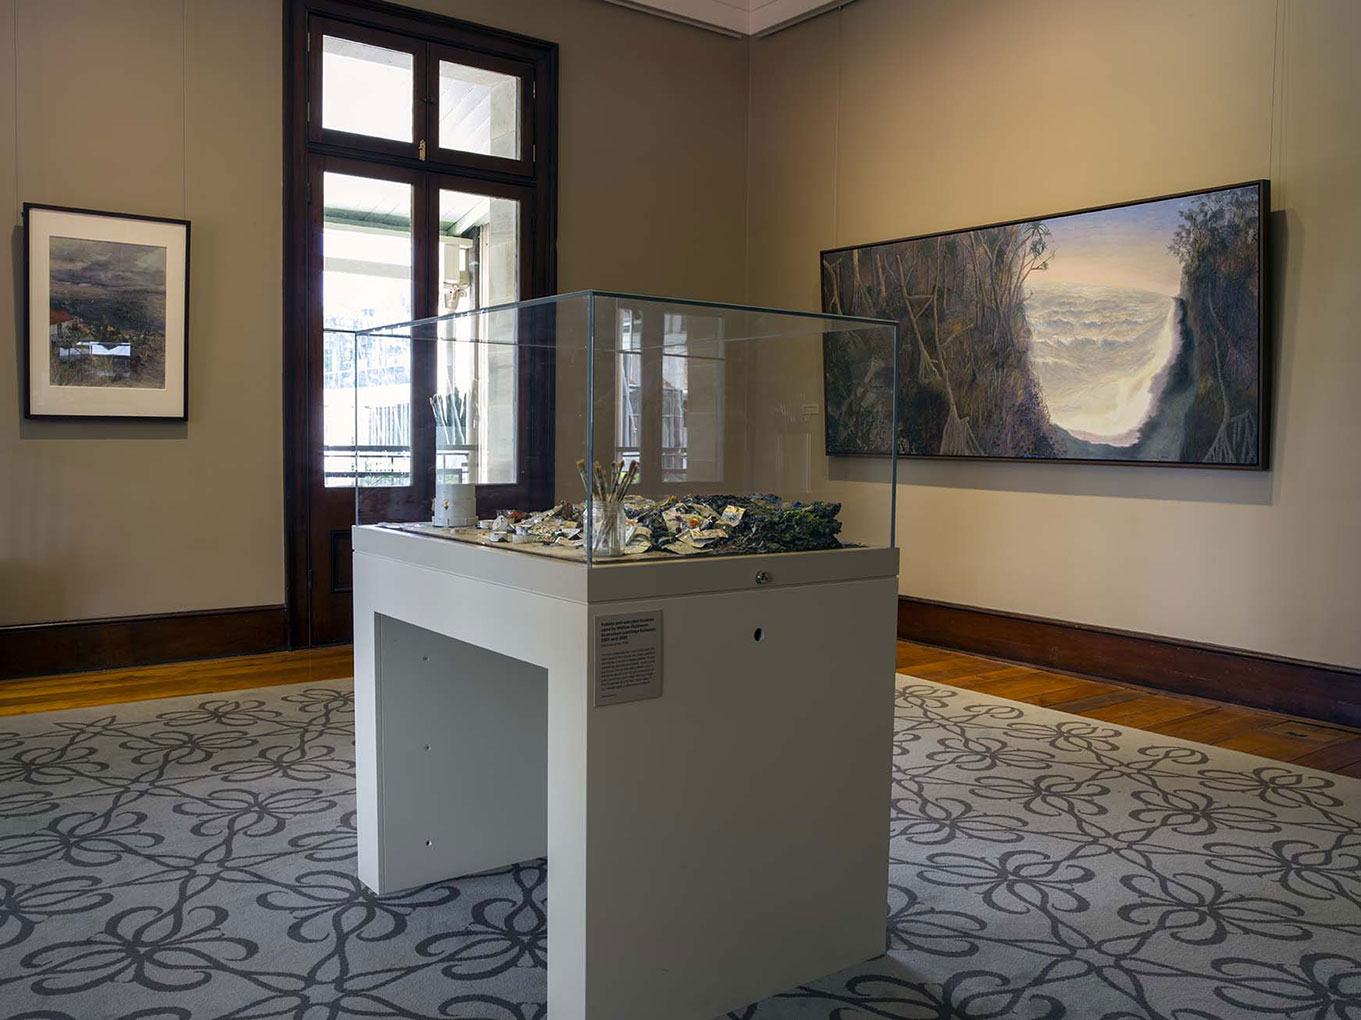 Installation view of 'William Robinson: Infinite sphere', 2014-15